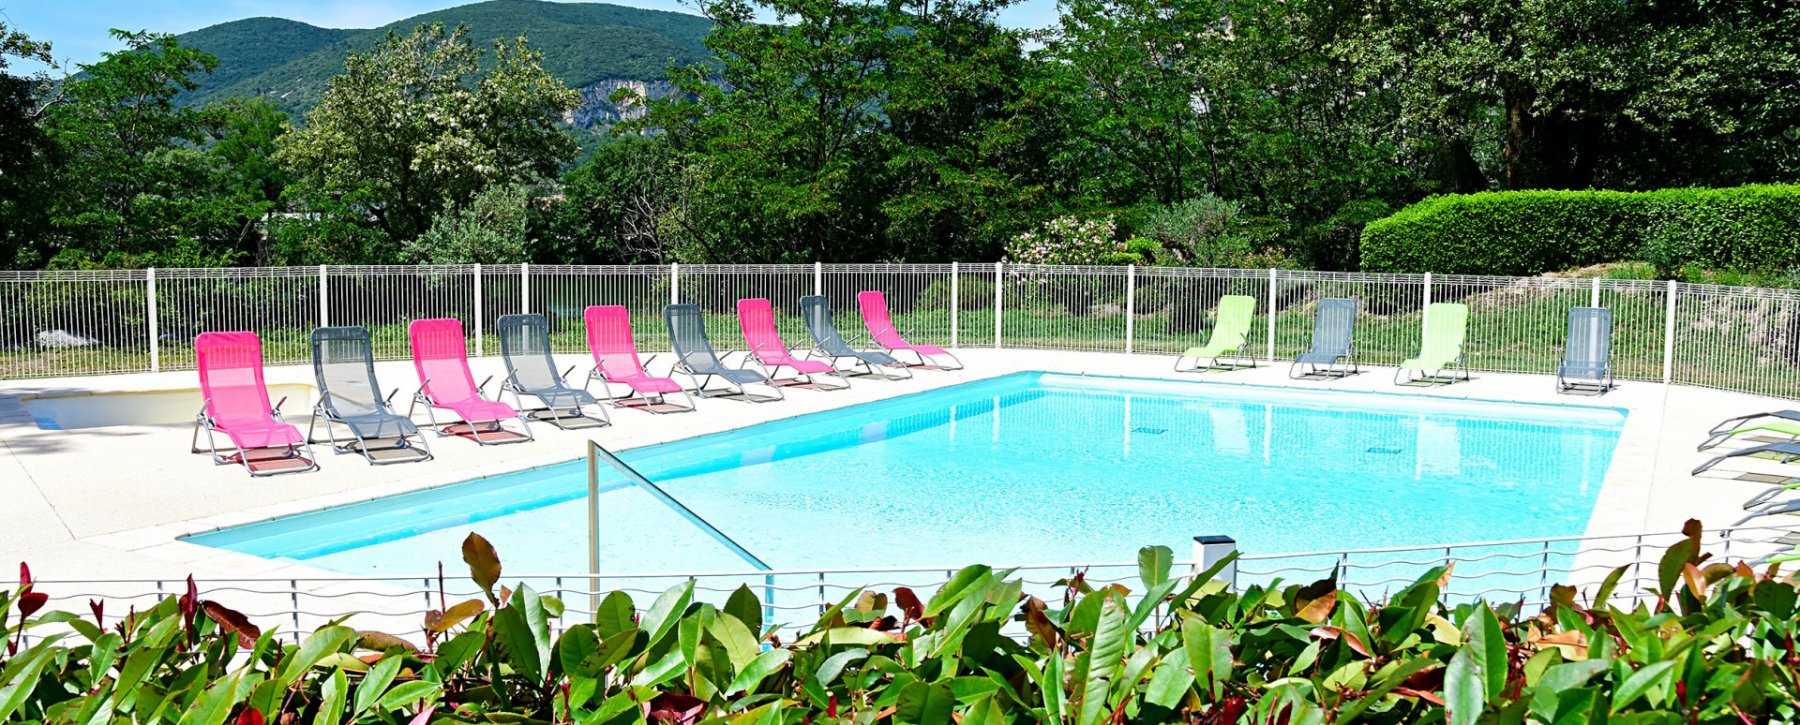 piscine camping Harmony transat Drome Provençale